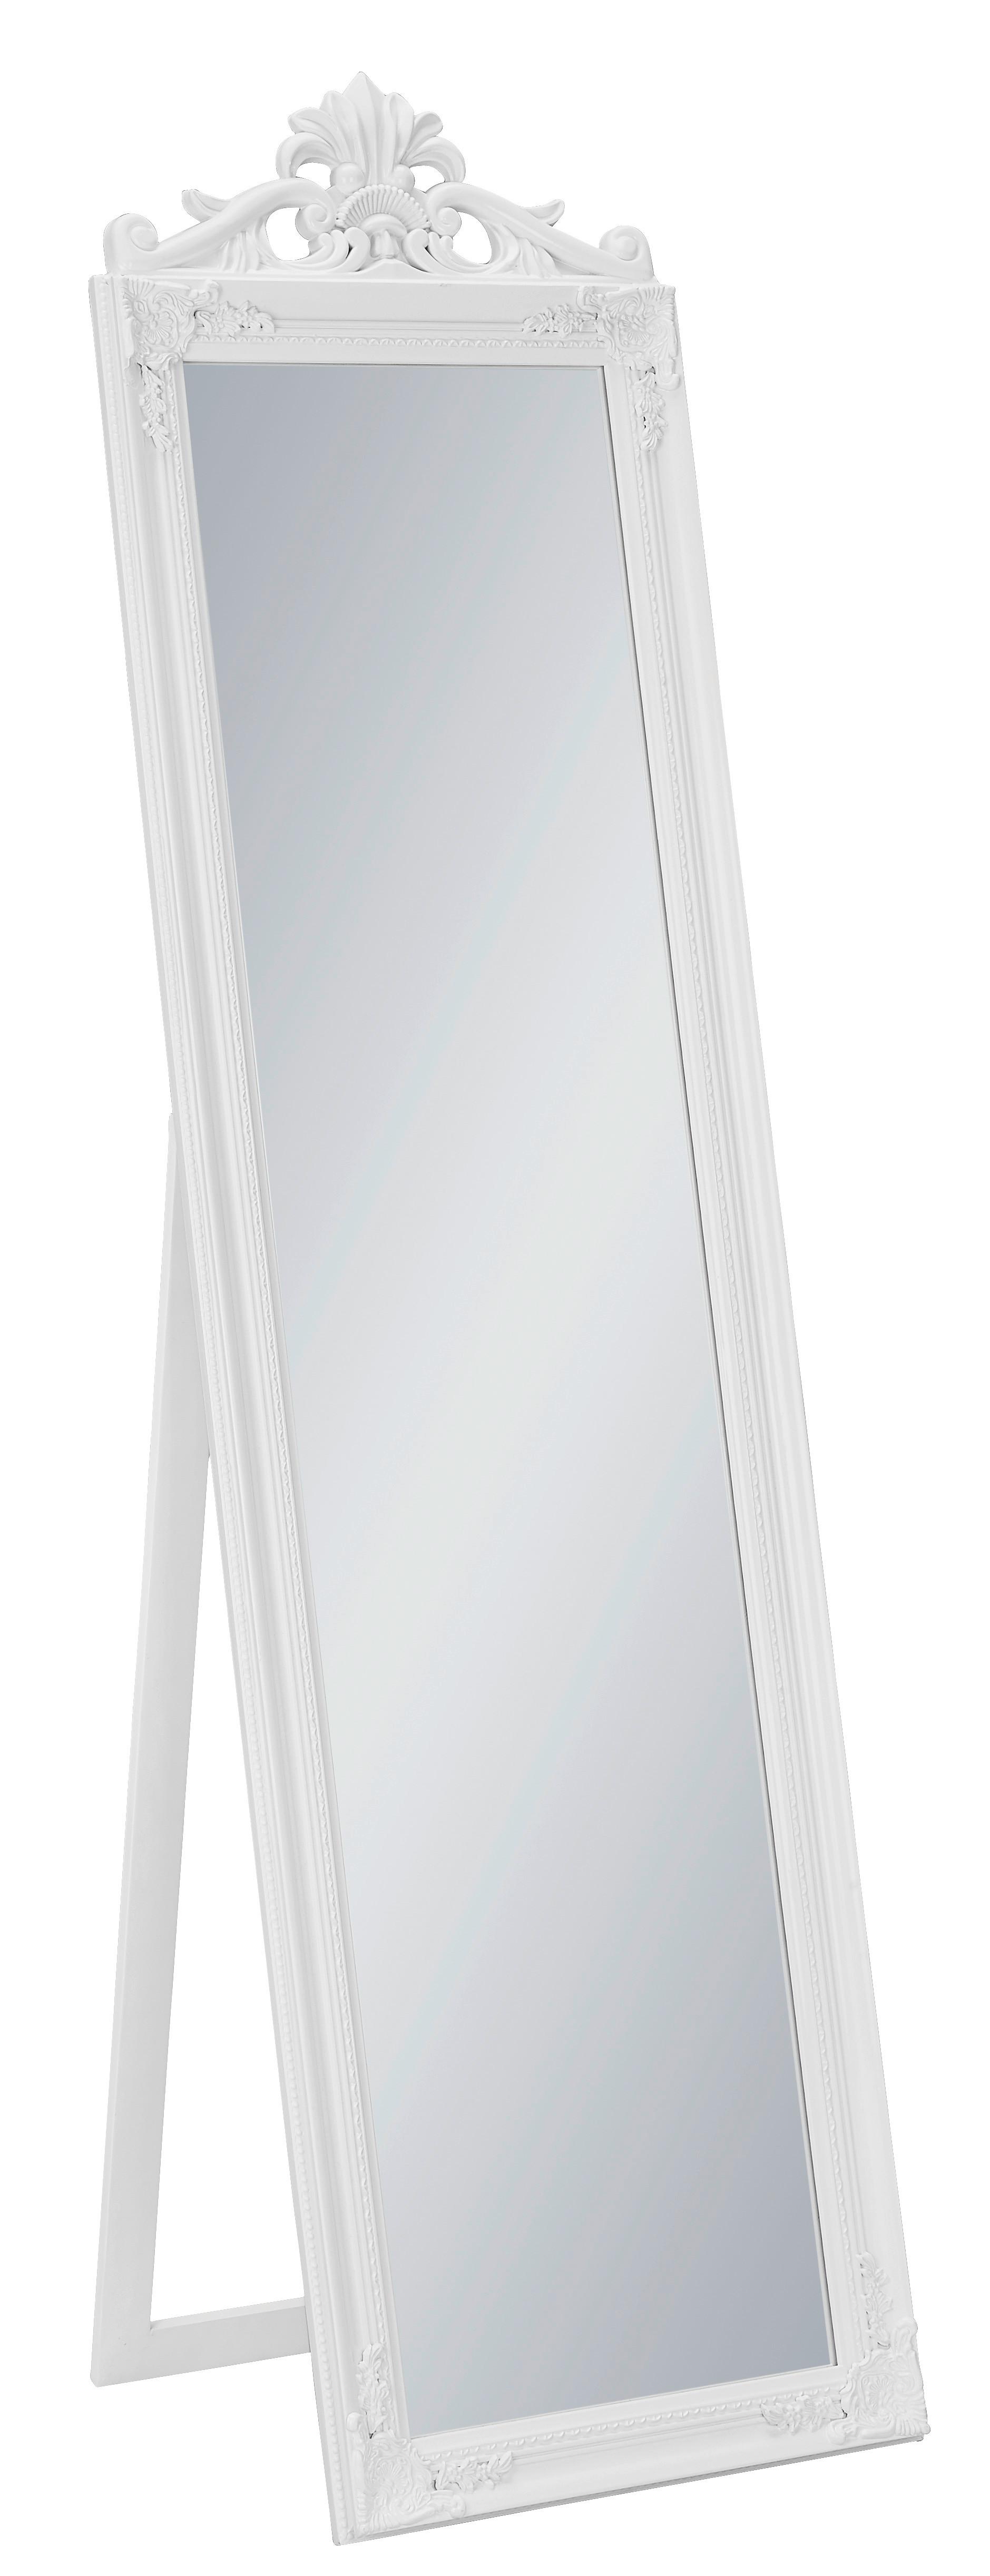 Standspiegel ca. 45x170x3,5cm - Weiß, Glas/Holz (45/170/3,5cm) - Modern Living